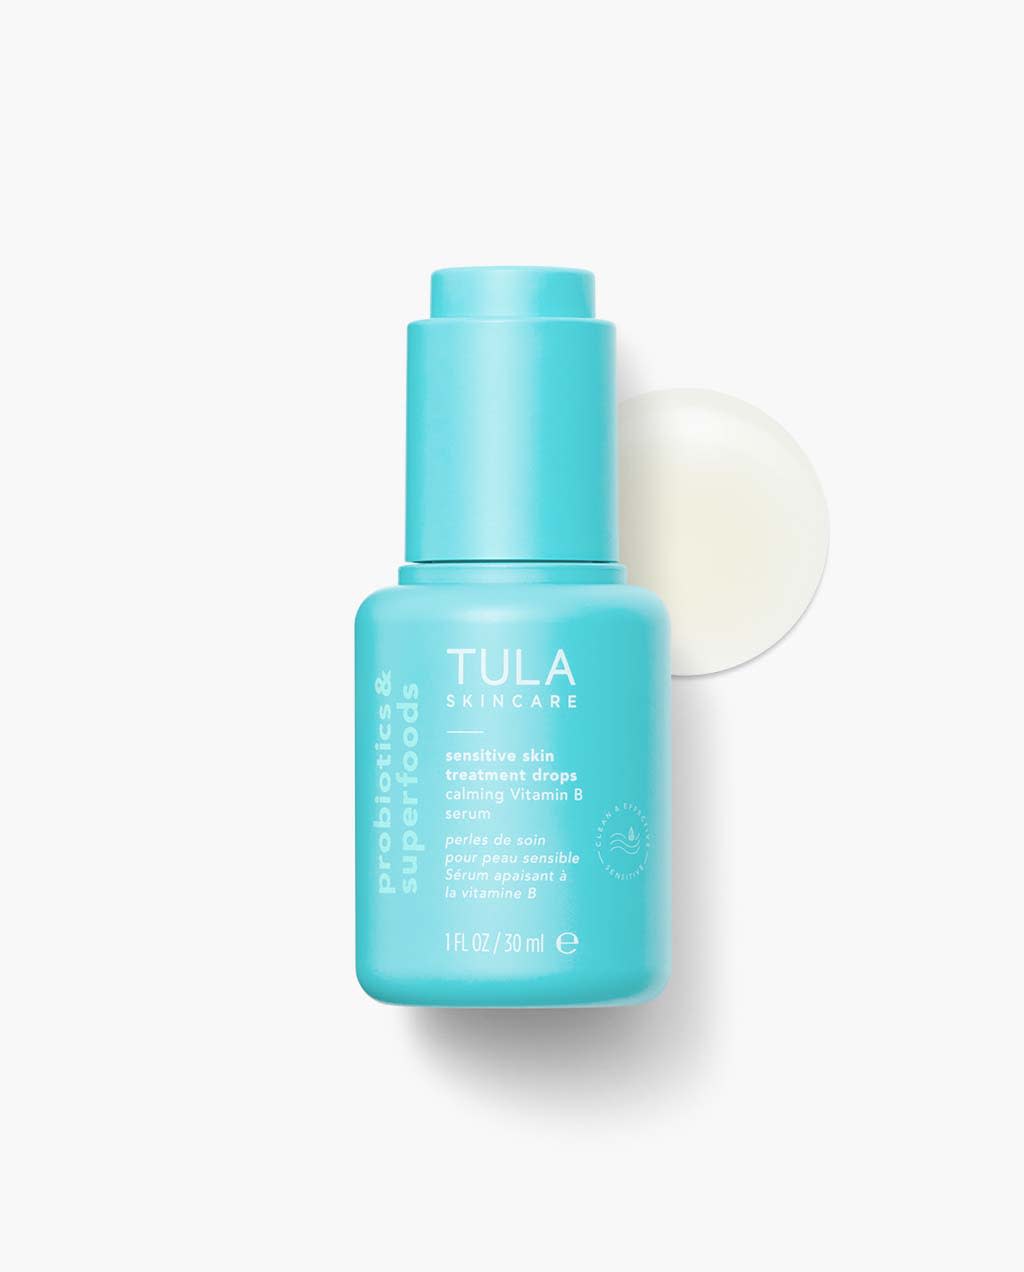 TULA Skin Care Sensitive Skin Treatment Drops